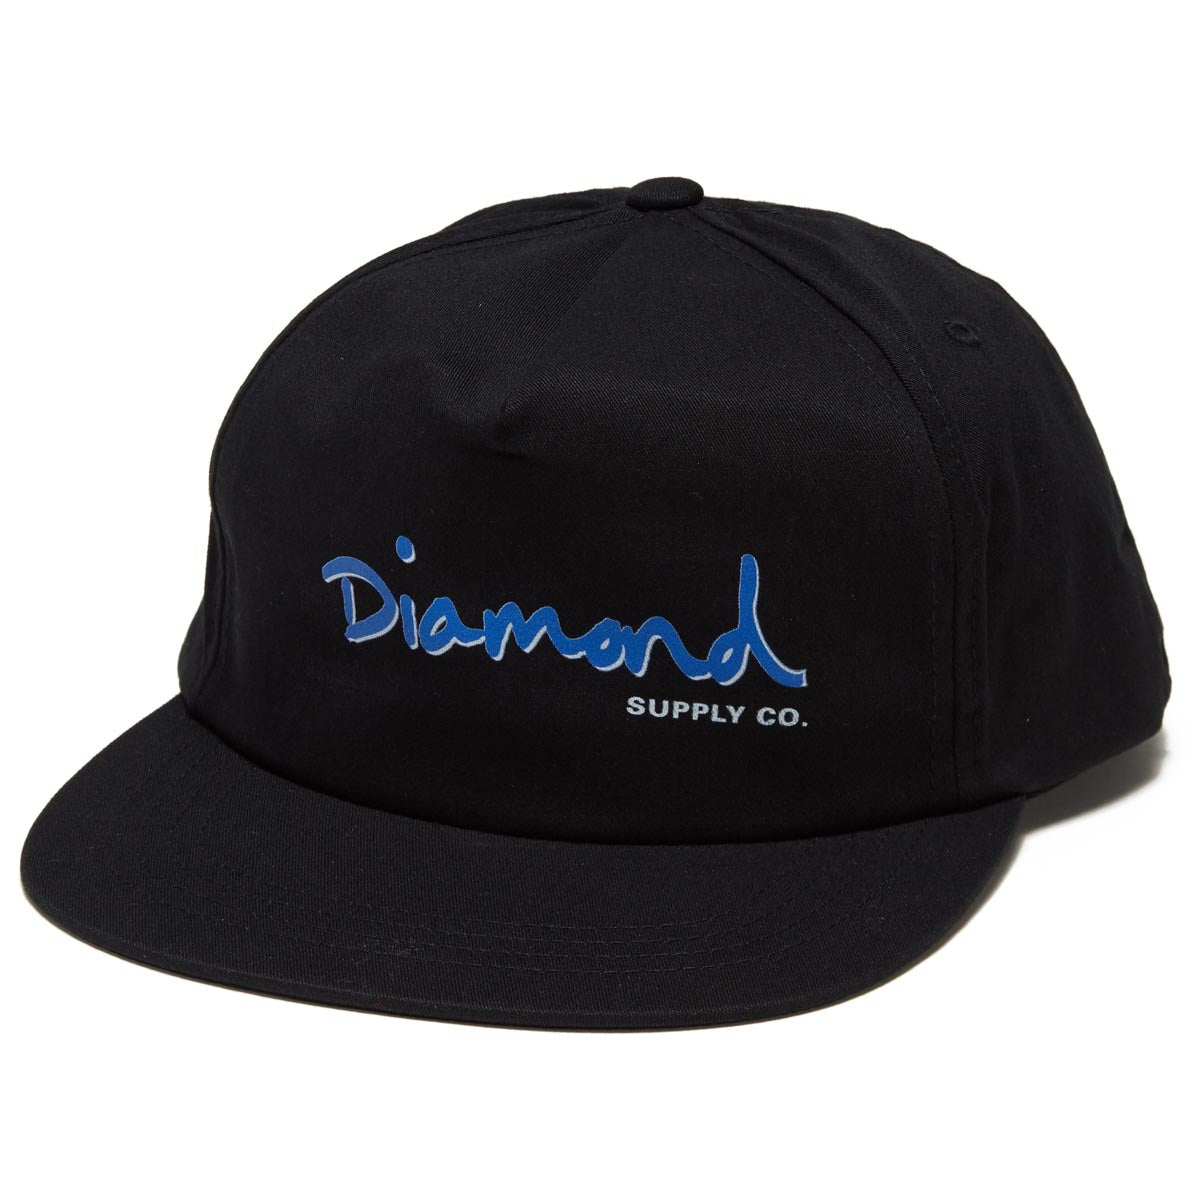 Diamond Supply Co. Outline Snapback Hat - Black image 1